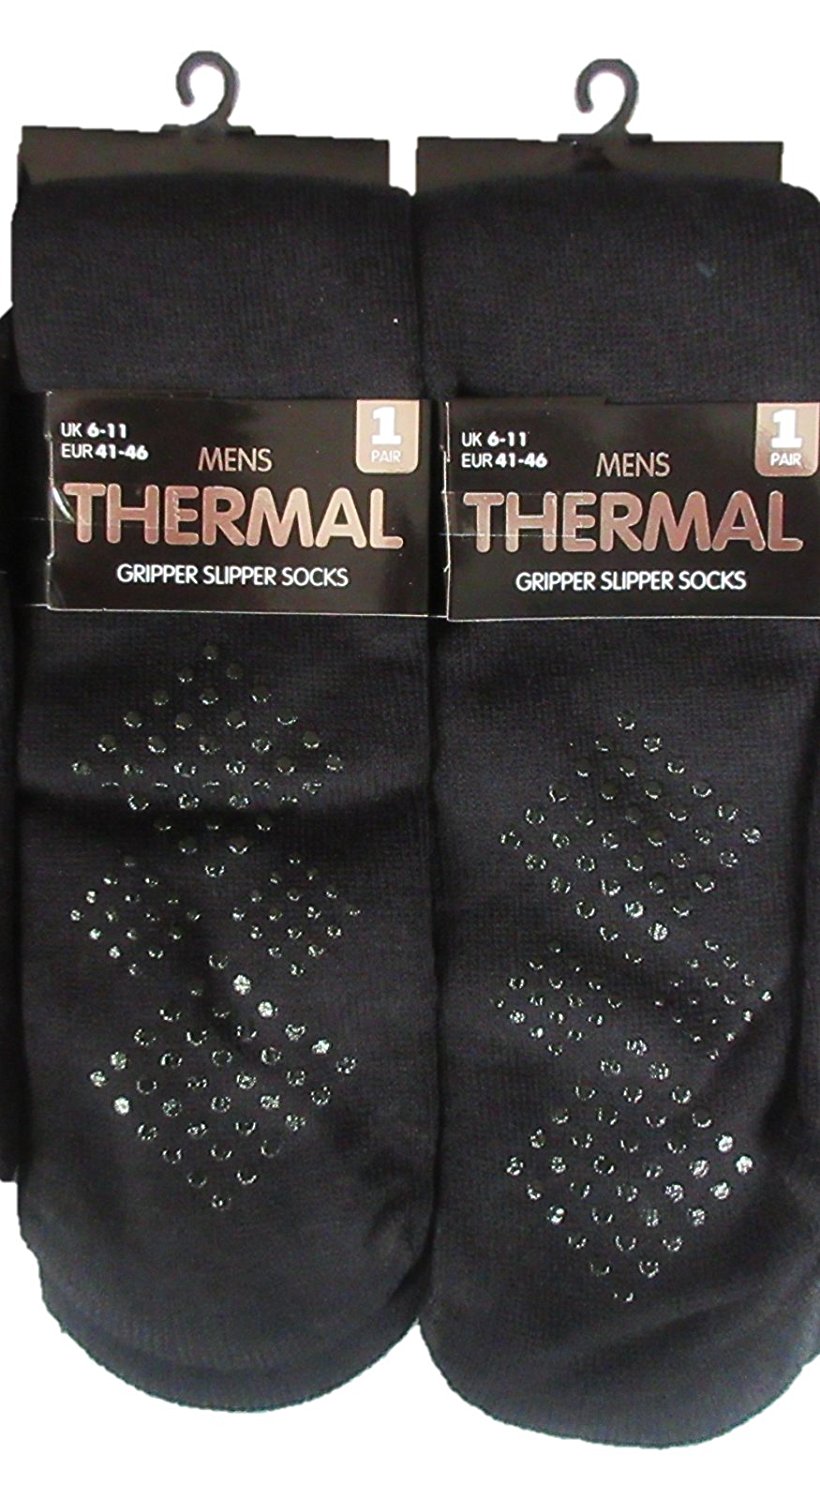 Mens Gripper Slipper 2 Pairs Thermal Socks Non Slip Silicone Grip Winter WarmBLK - hanrattycraftsgifts.co.uk